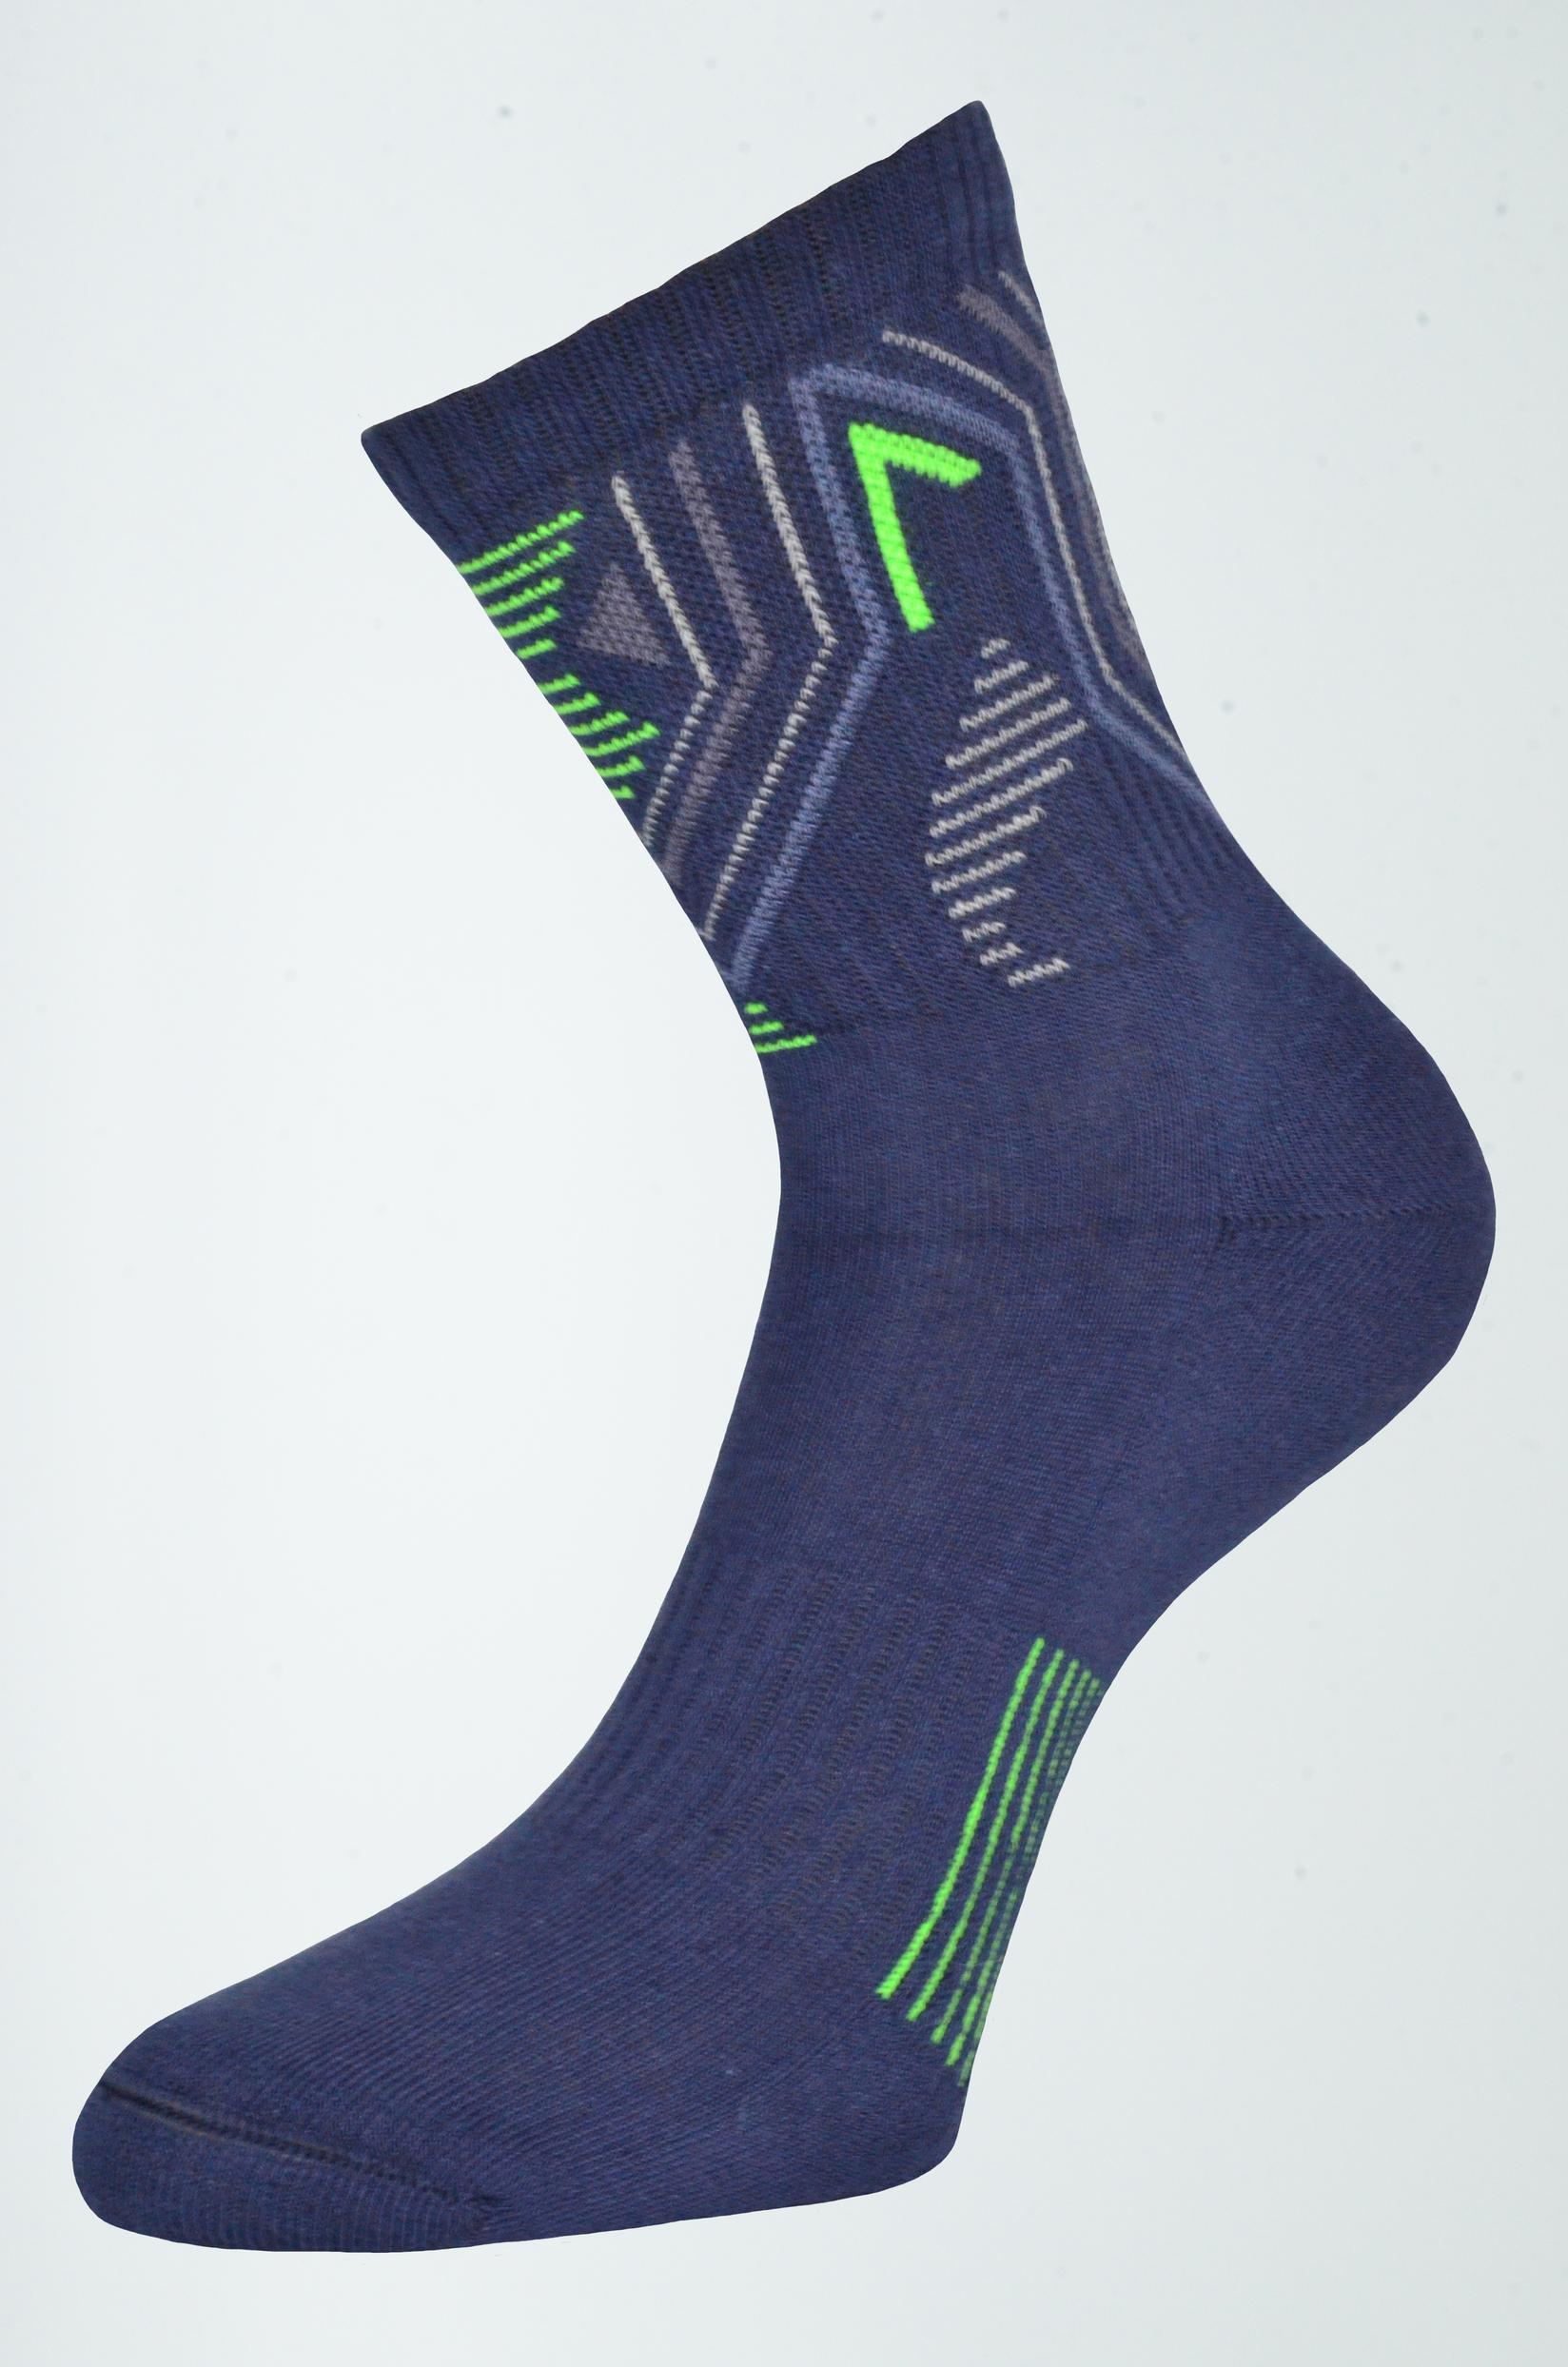 Selected image for GERBI Sportske čarape Sport Style 36-38 m9 teget